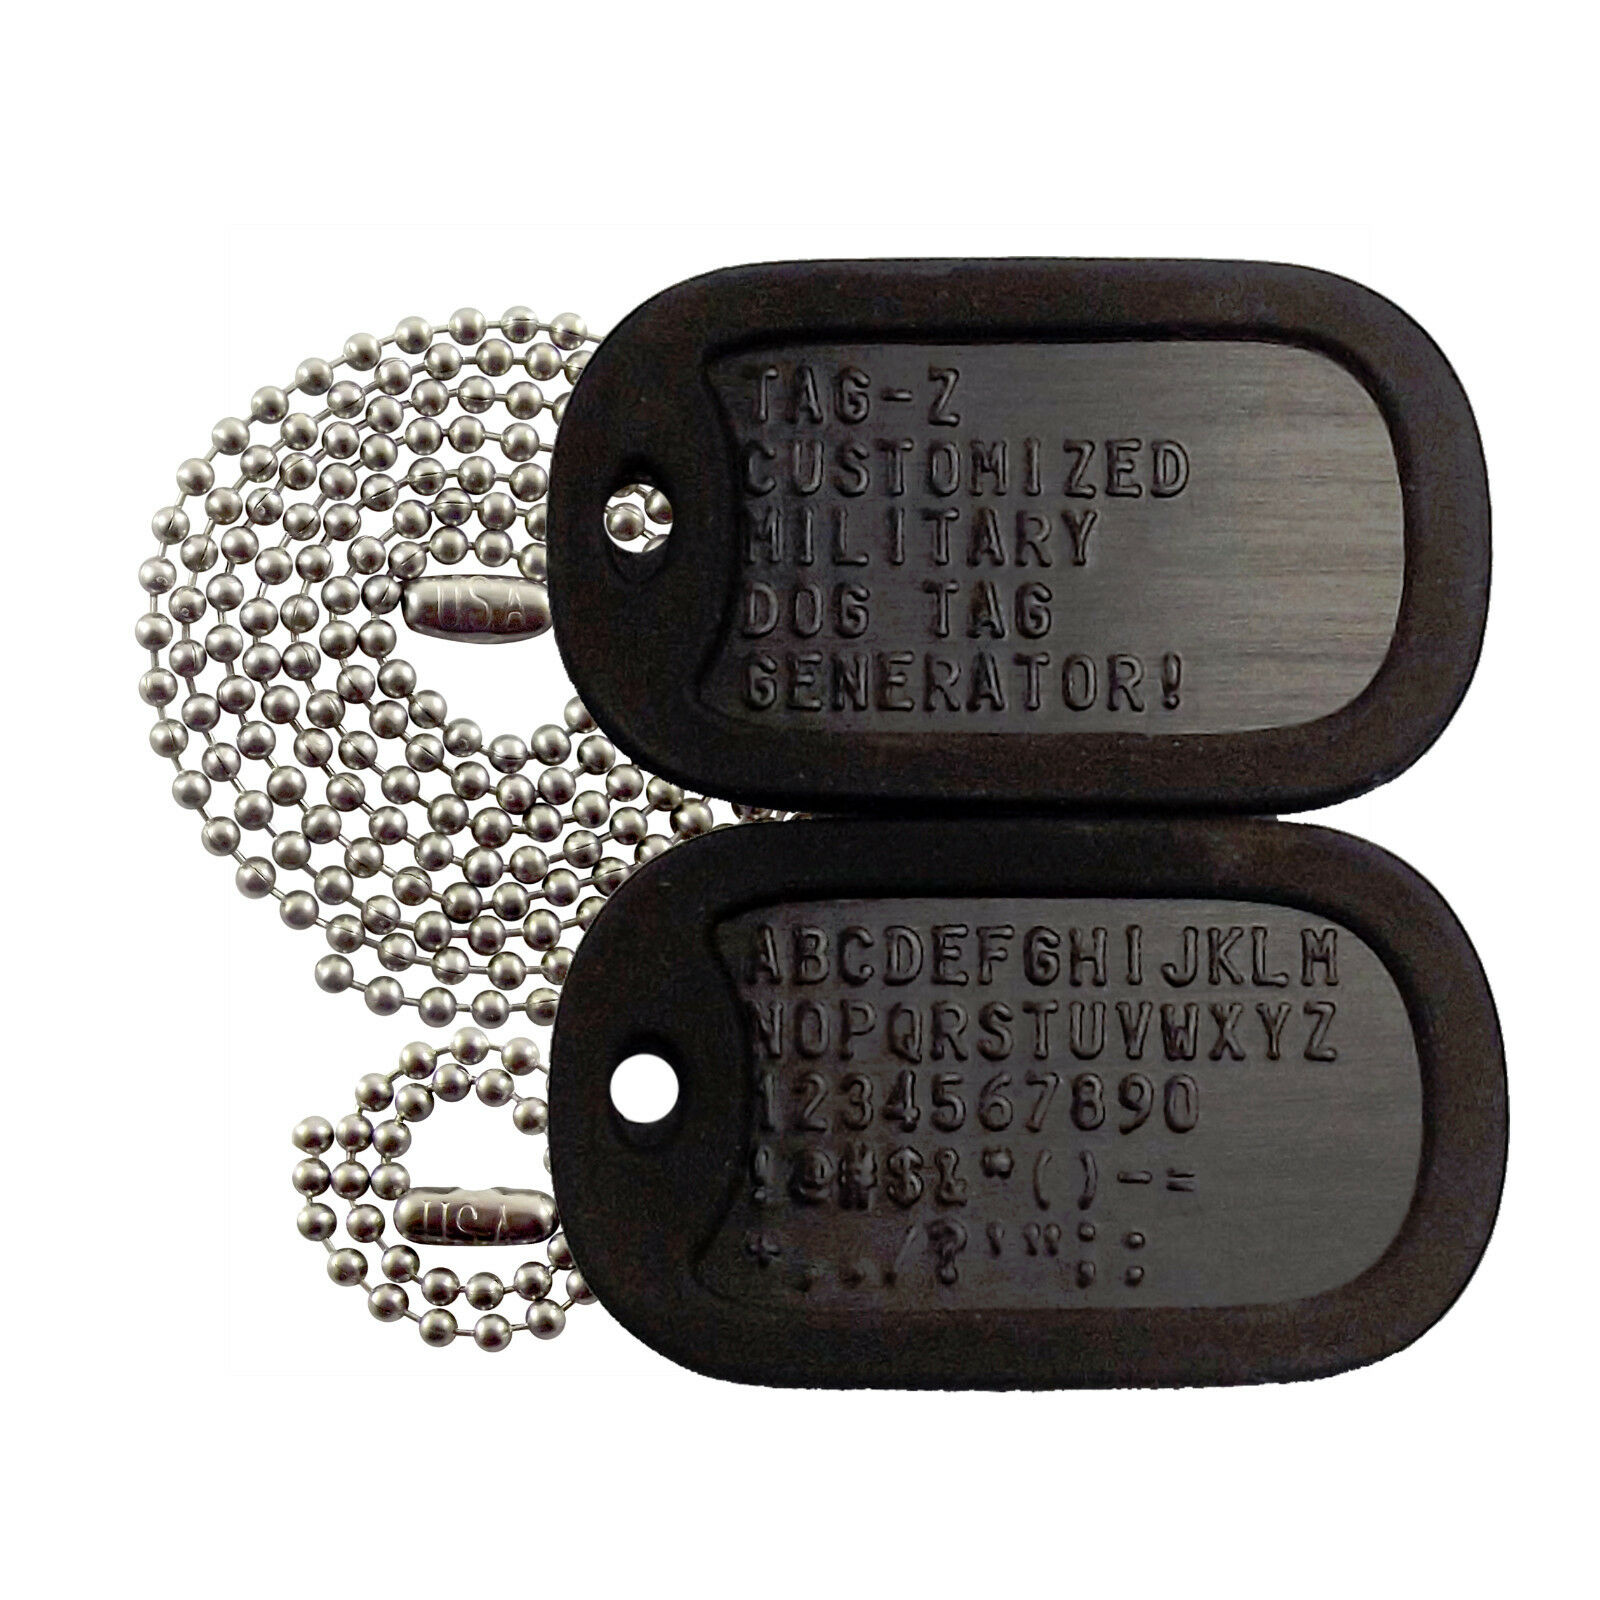 2 Military Dog Tags - Custom Embossed Black - Gi Identification W/ Silencers